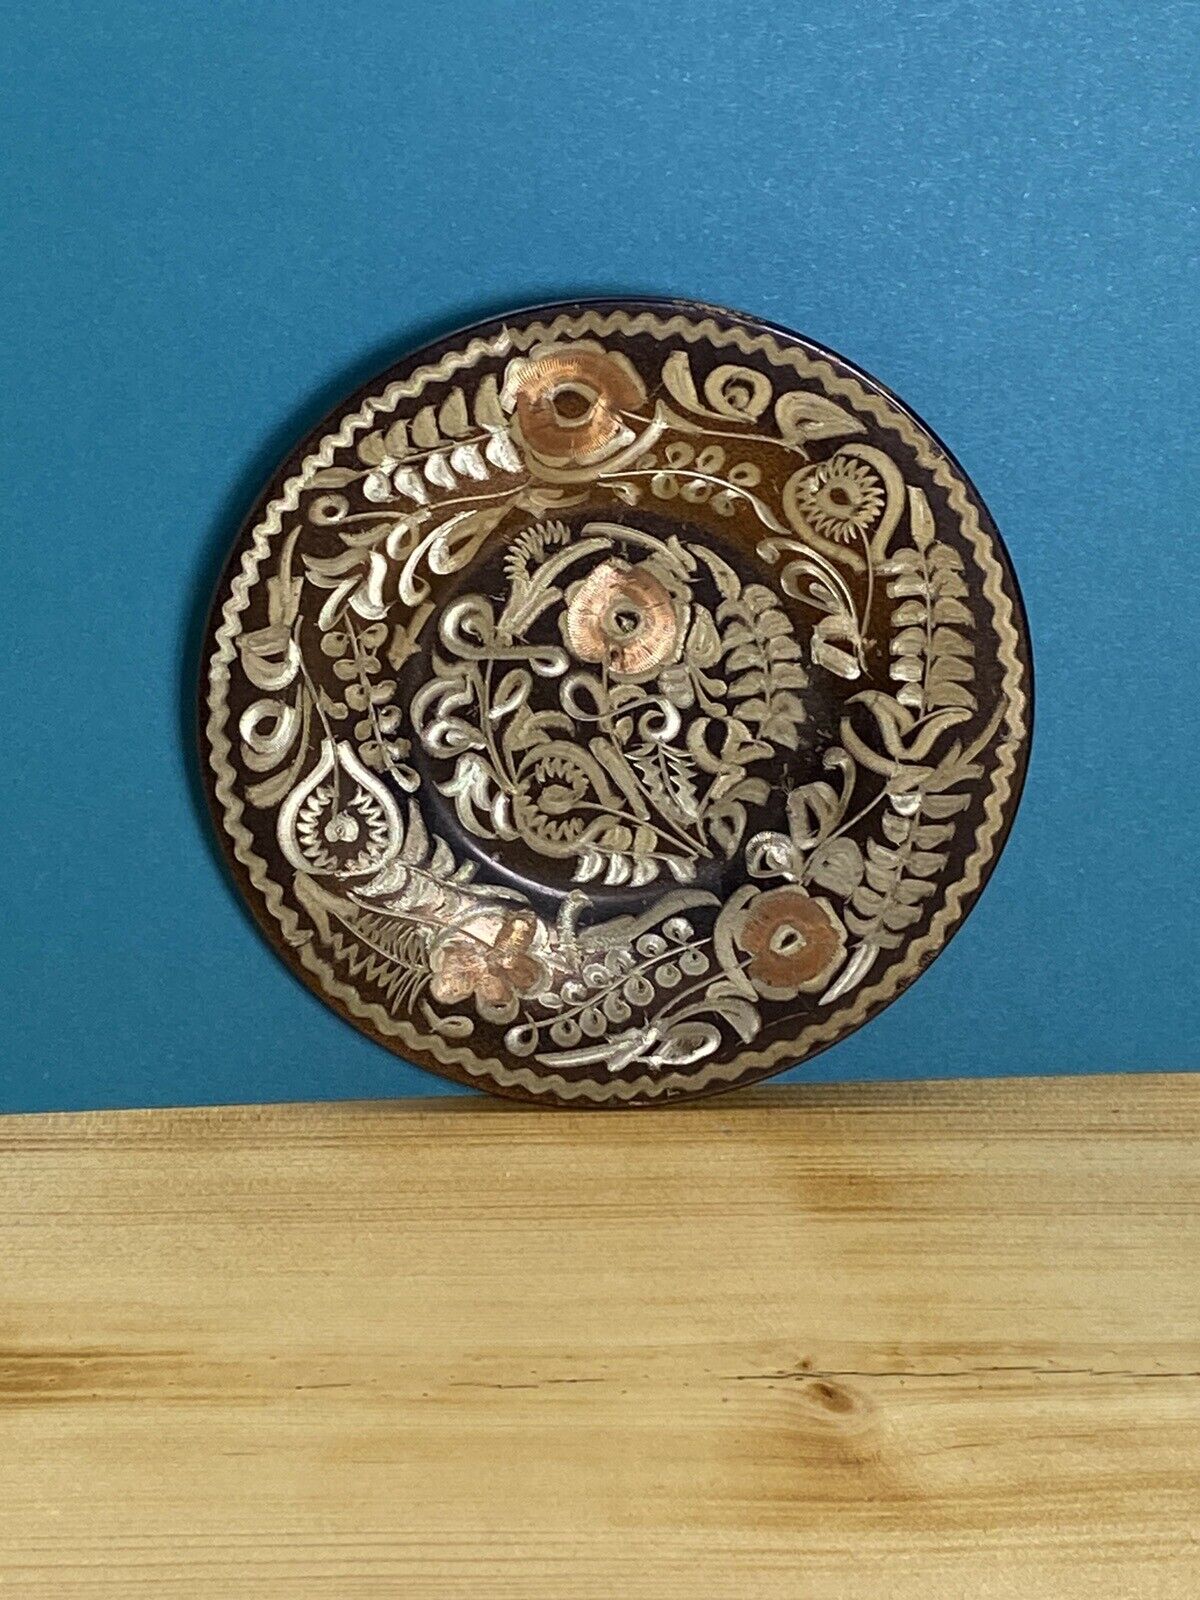 Erzincanlilar Hand Etched Copper Decor Plate Istanbul Turkey Floral Design 4”